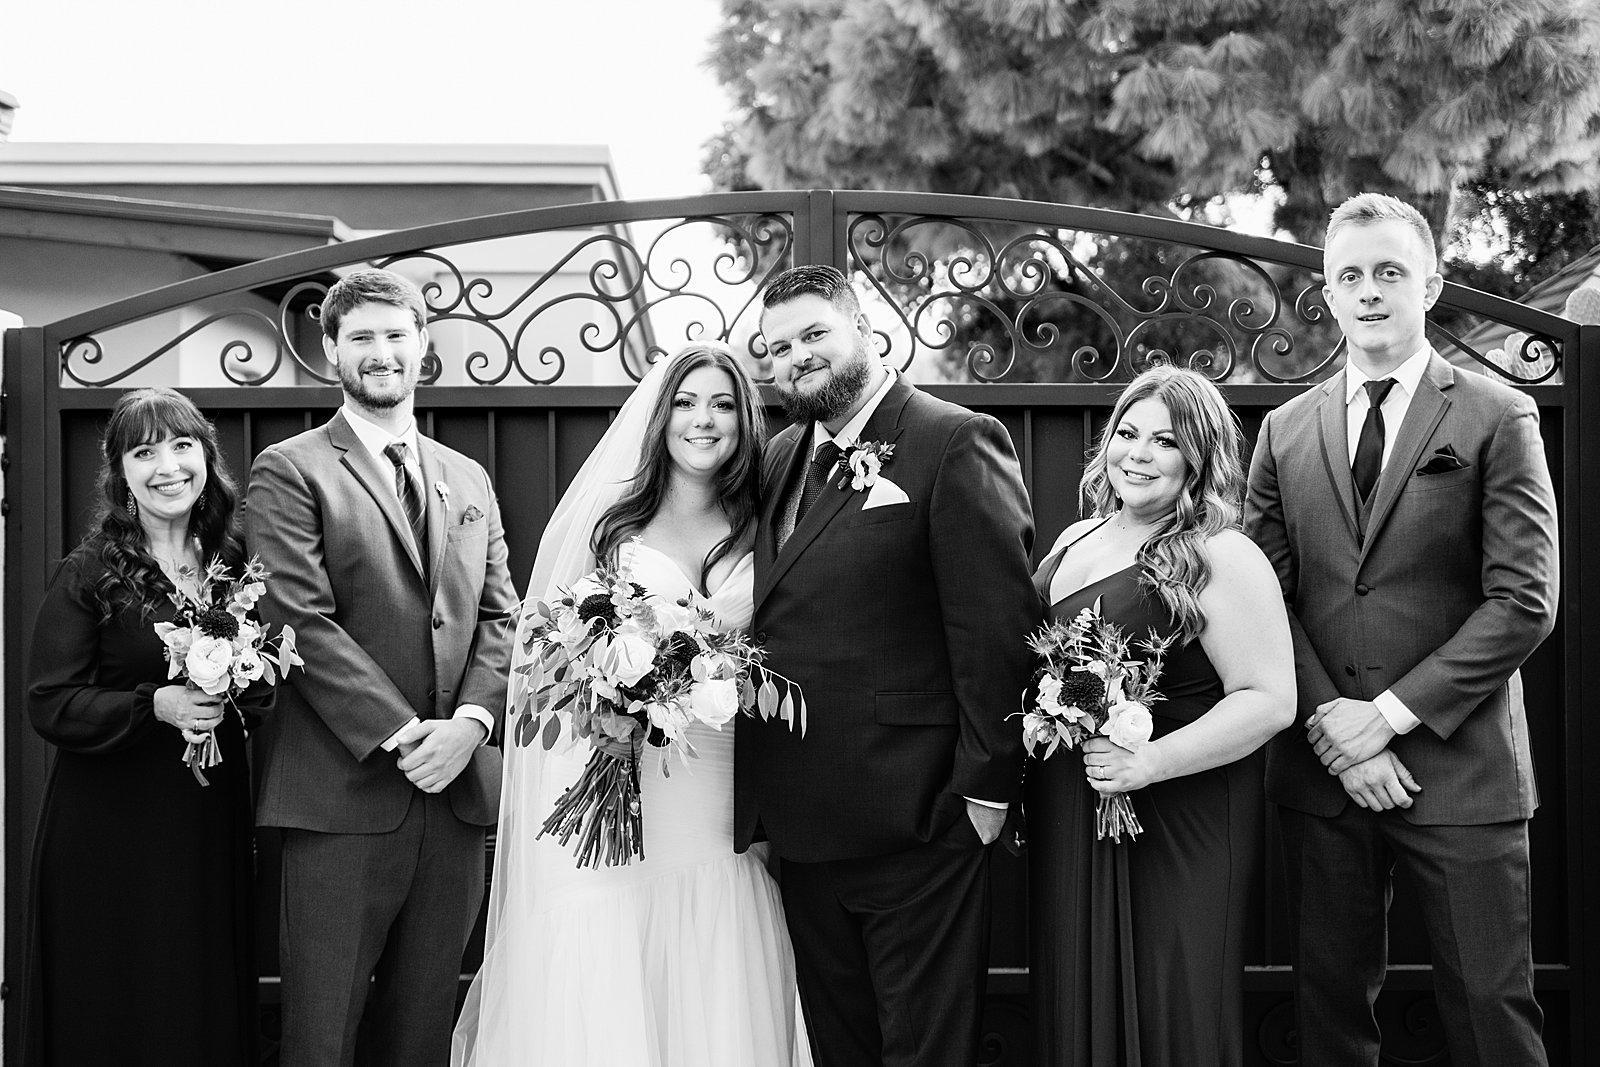 Bridal party together at a Arizona backyard wedding by Arizona wedding photographer PMA Photography.